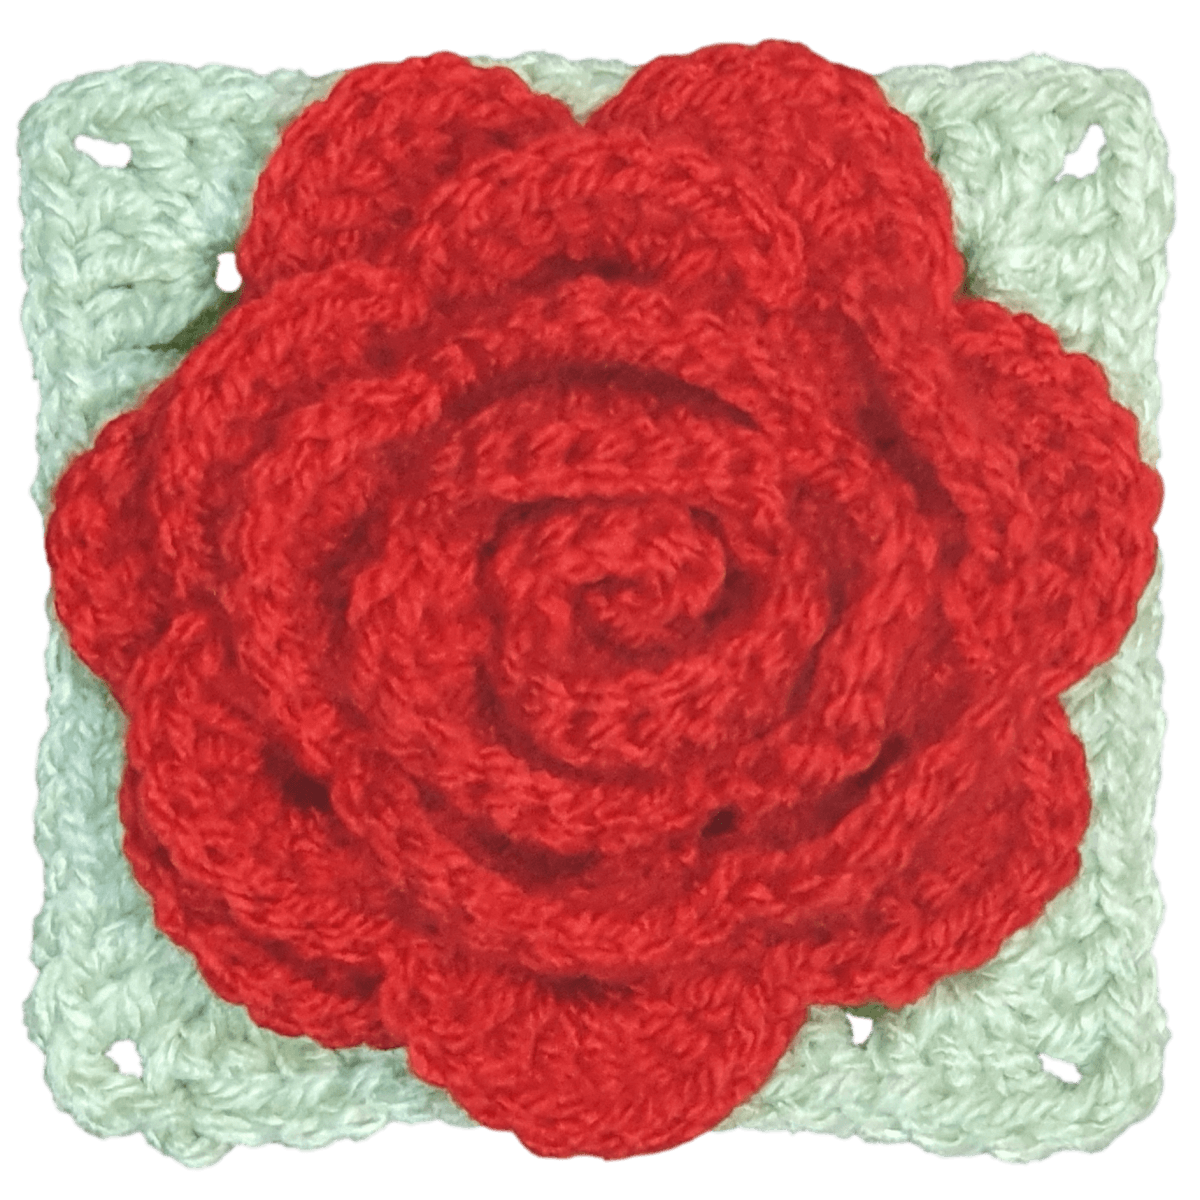 Ultimate 3D Crochet Rose Granny Square - The Secret Yarnery